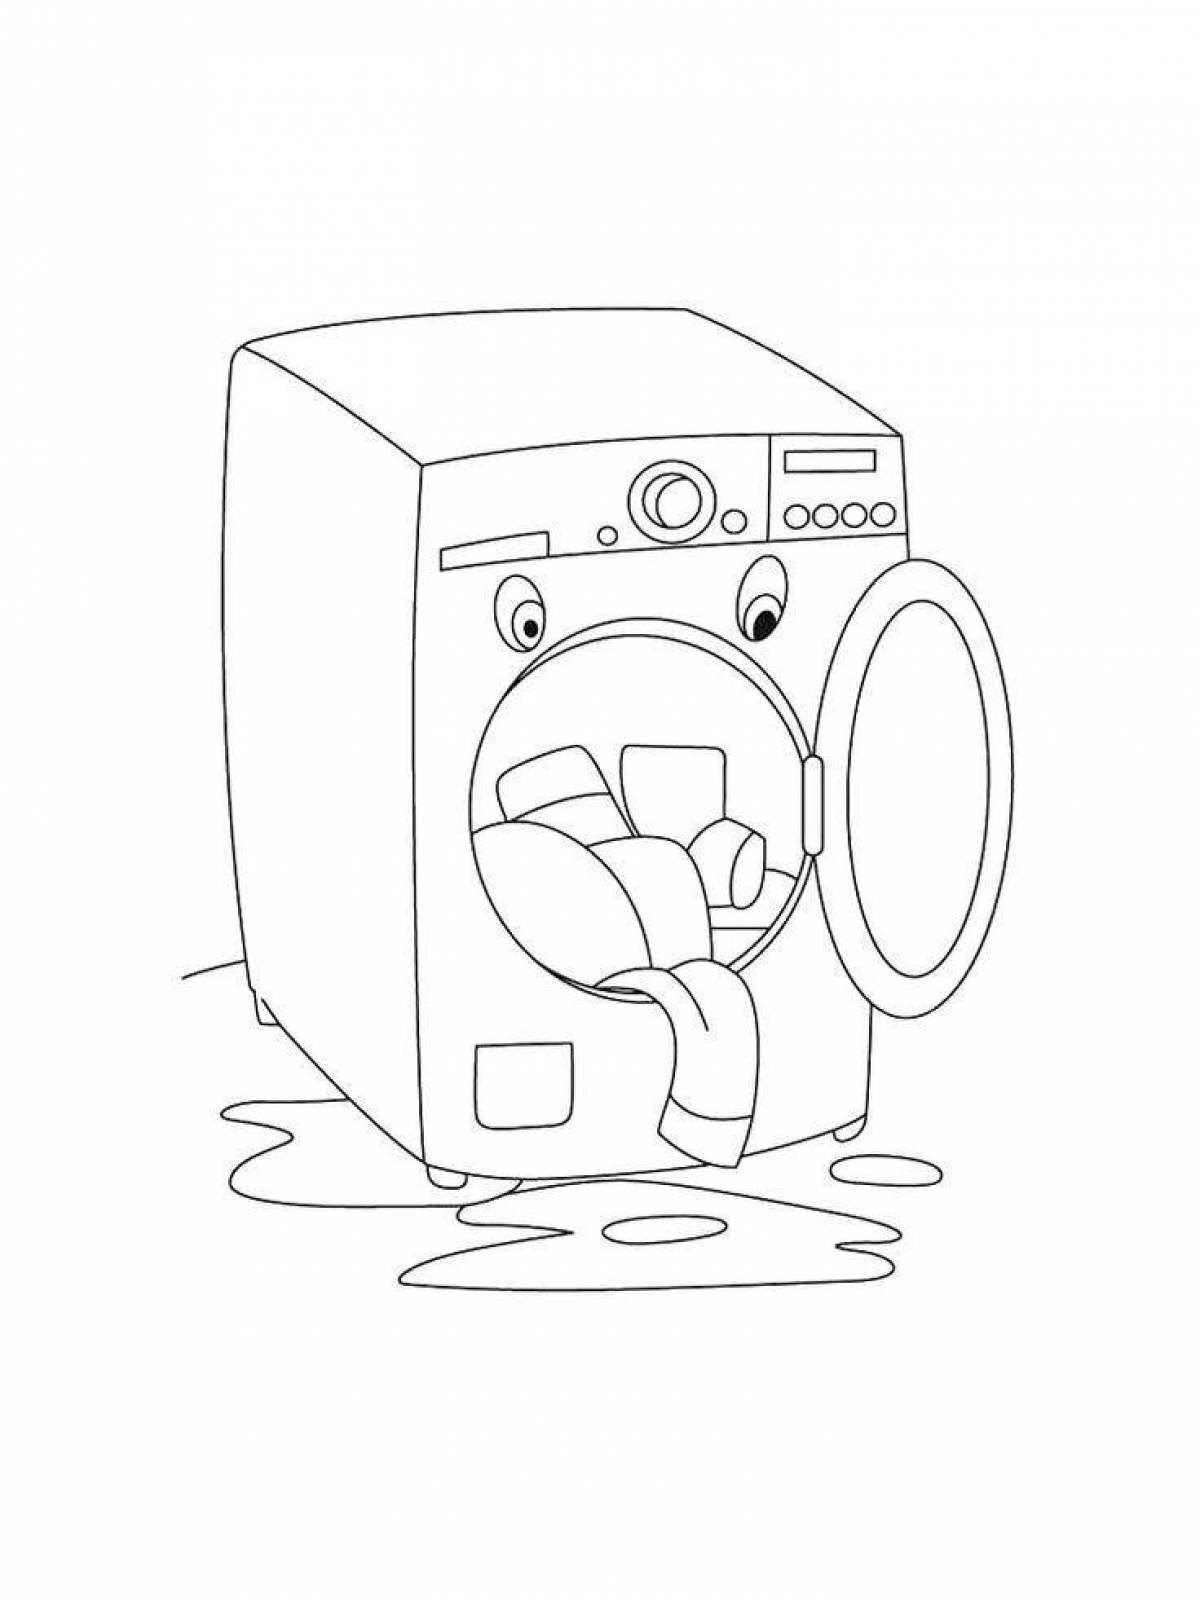 Great washing machine coloring page